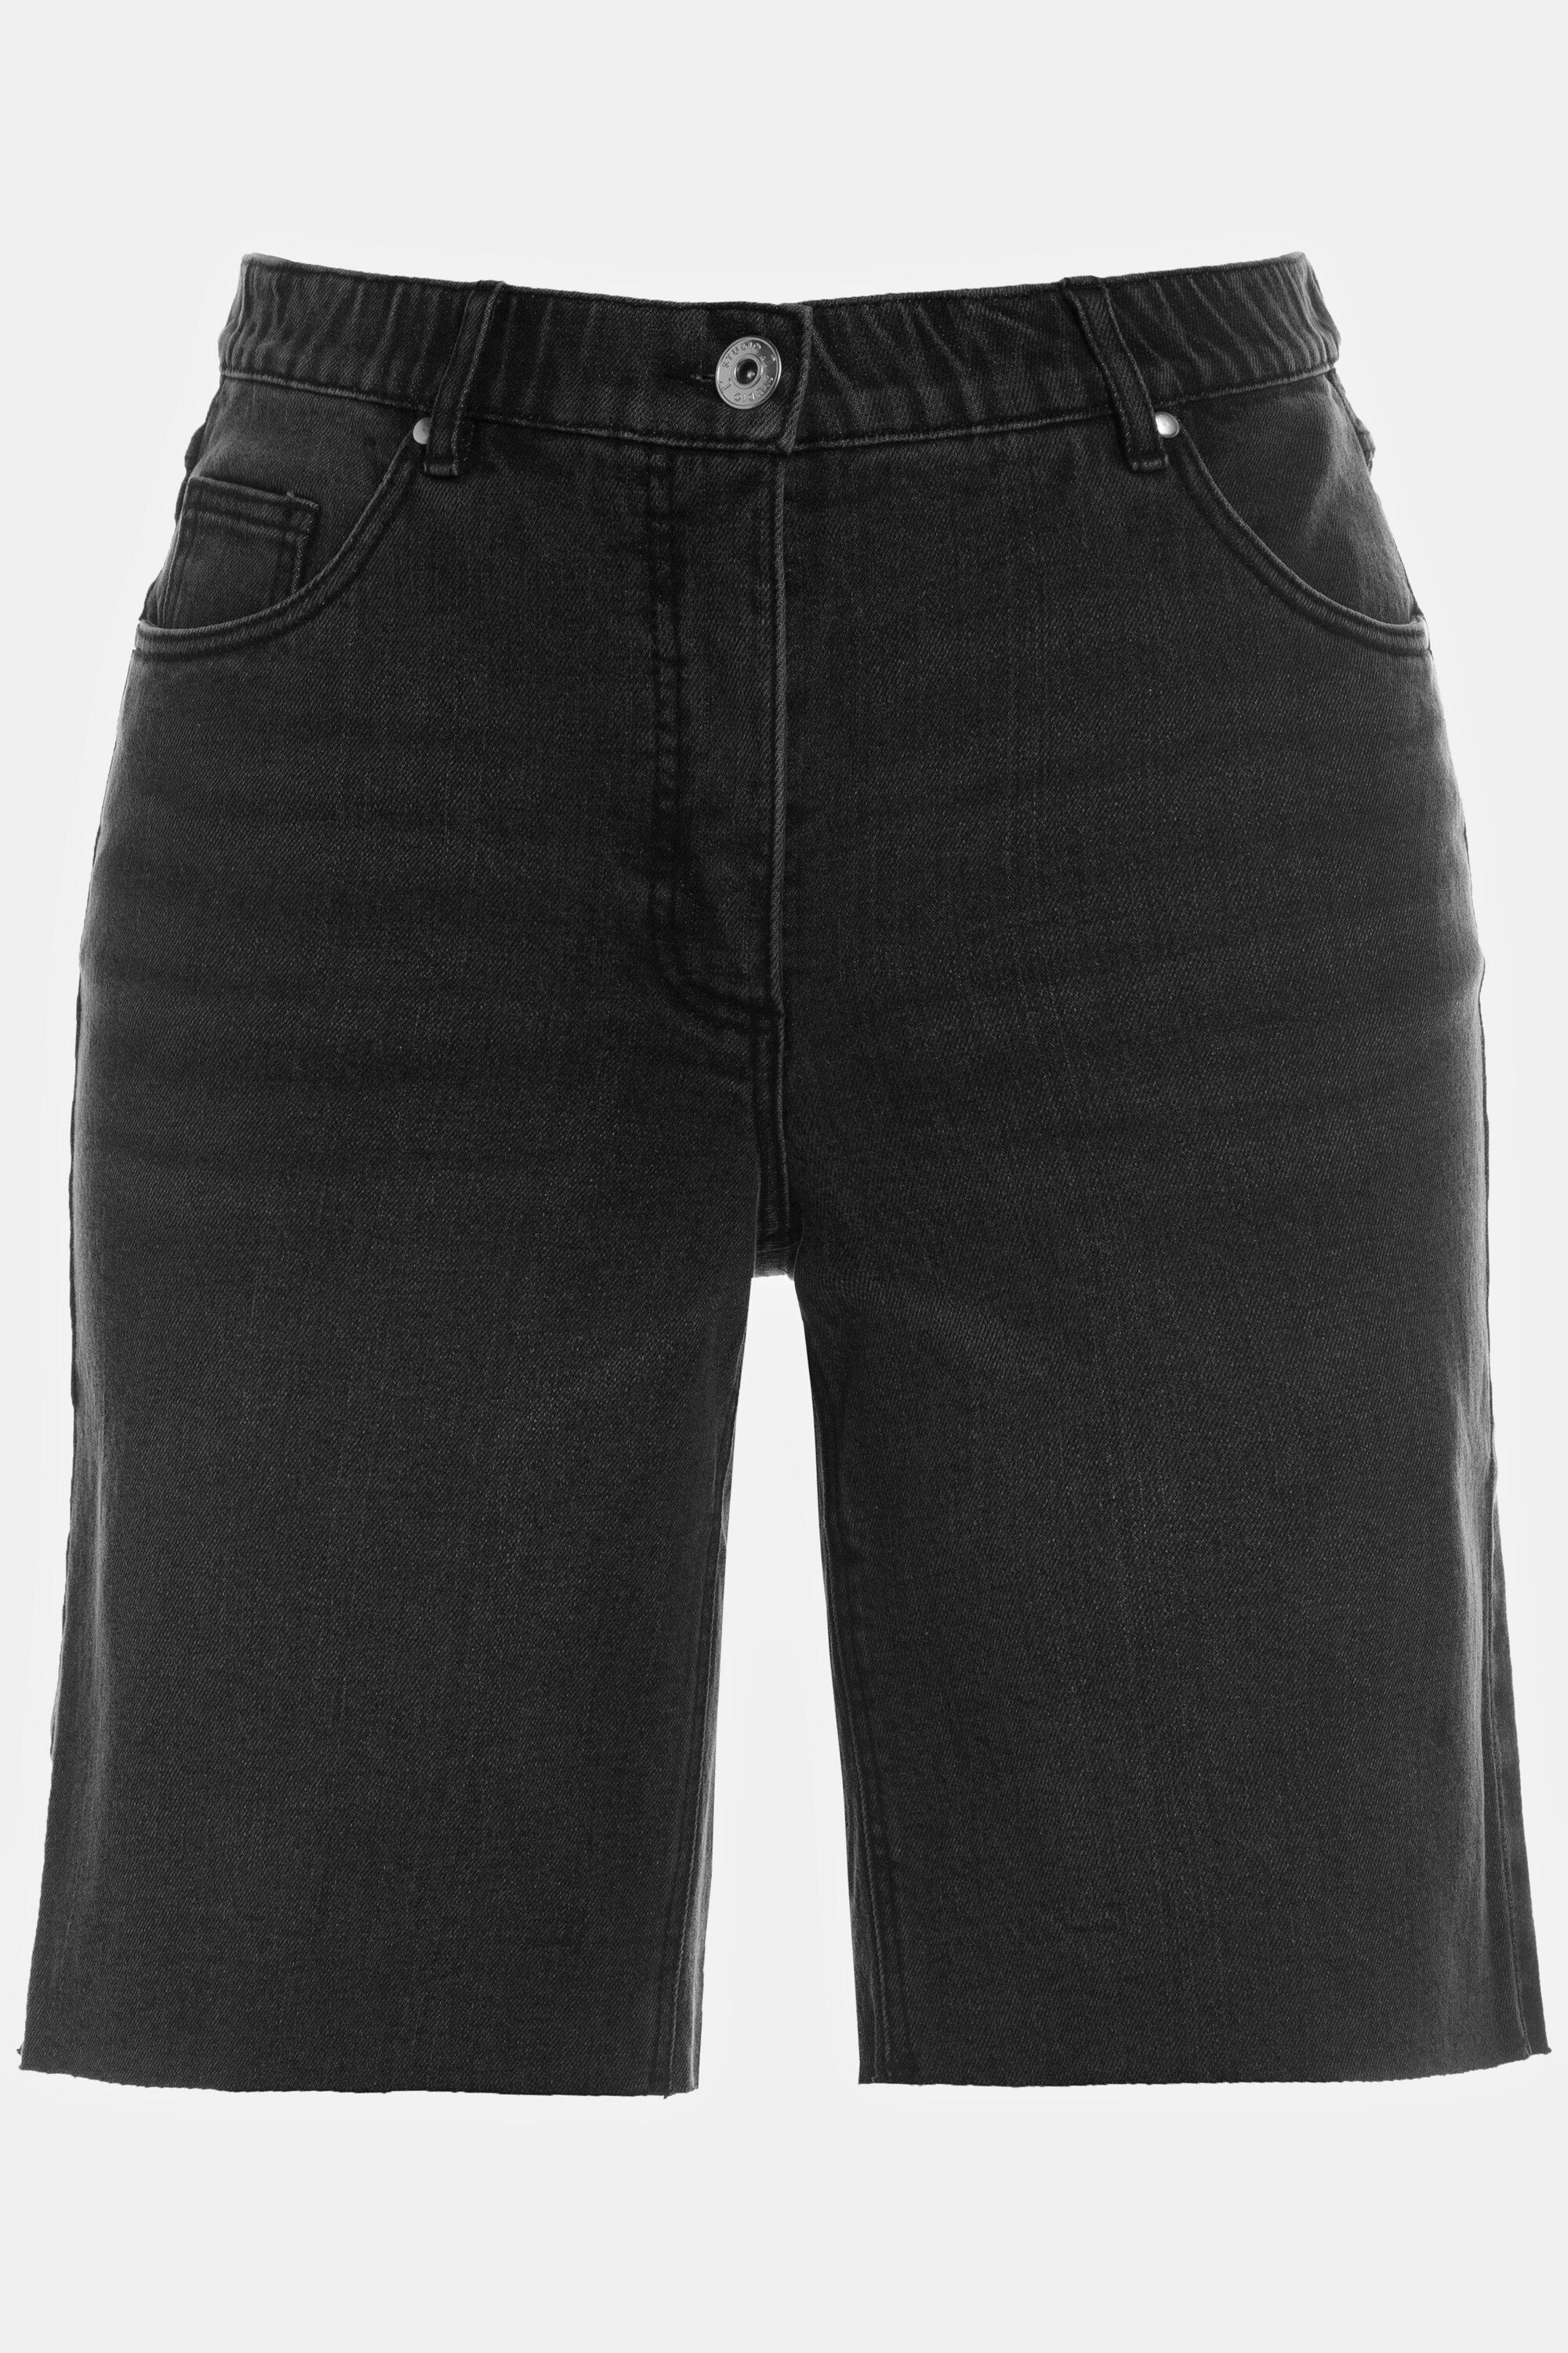 Waist Jeans-Shorts black 5-Pocket Studio High Untold Jeansshorts